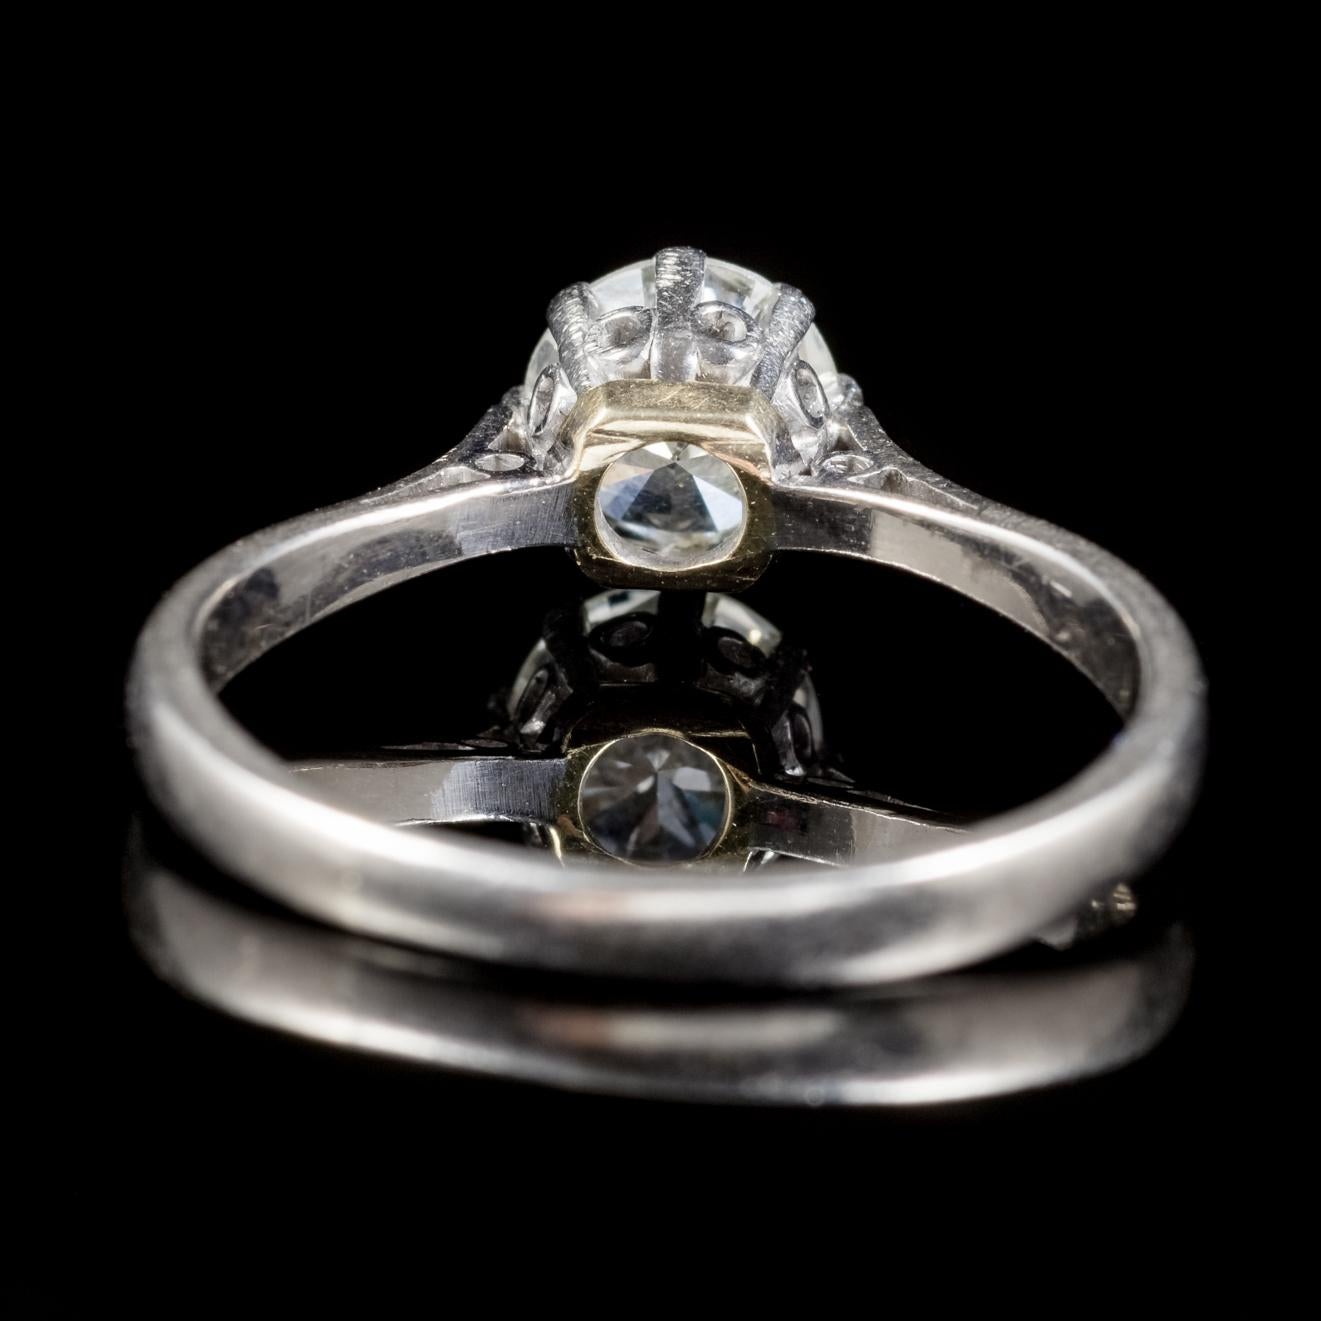 Women's Antique Edwardian Diamond Solitaire Ring 18 Carat Gold Ring, circa 1910